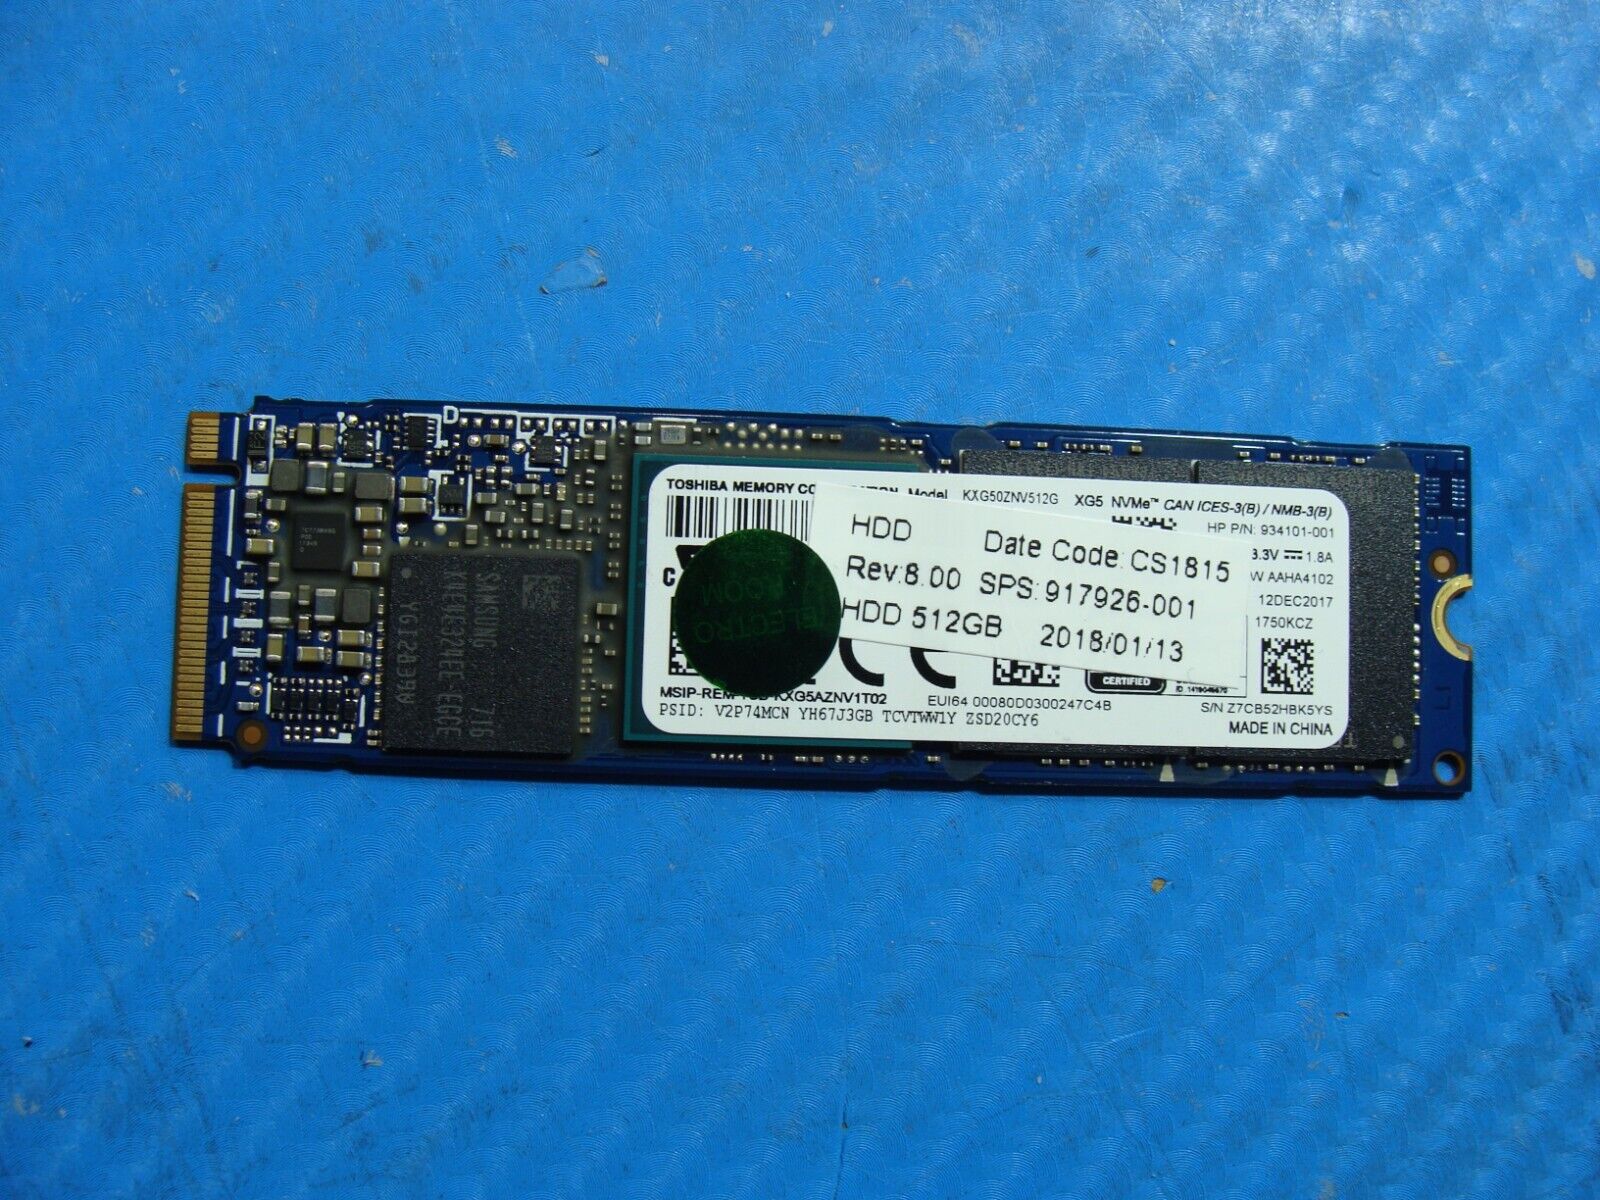 HP 1030 G2 Toshiba 512GB M.2 NVMe SSD Solid State Drive KXG50ZNV512G 917926-001